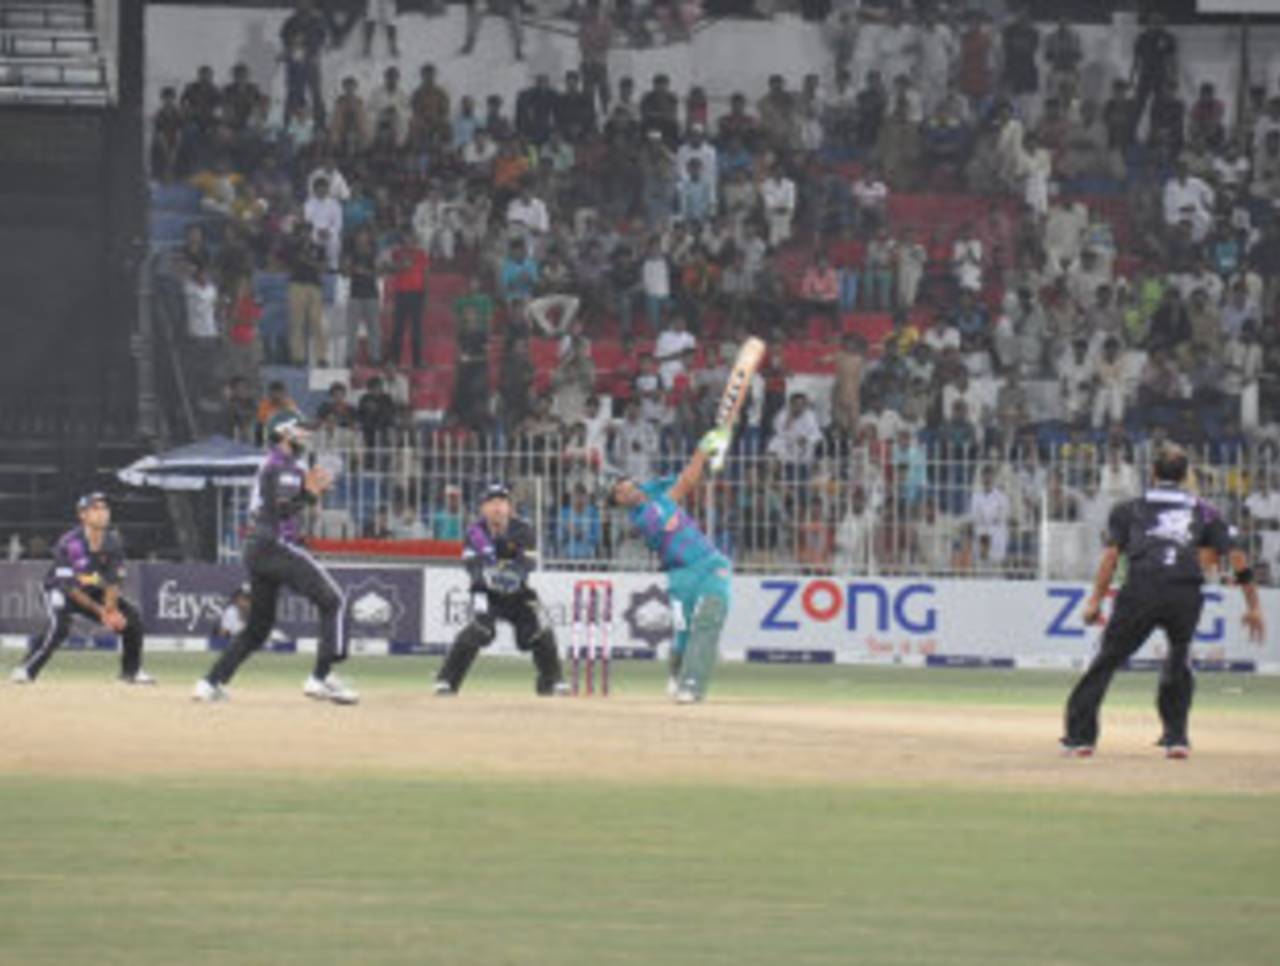 Jamal Anwar hits the winning six for Rawalpindi, Faisalabad v Rawalpindi, Faysal Bank Super Eight T20 Cup, Faisalabad, June 26, 2011 